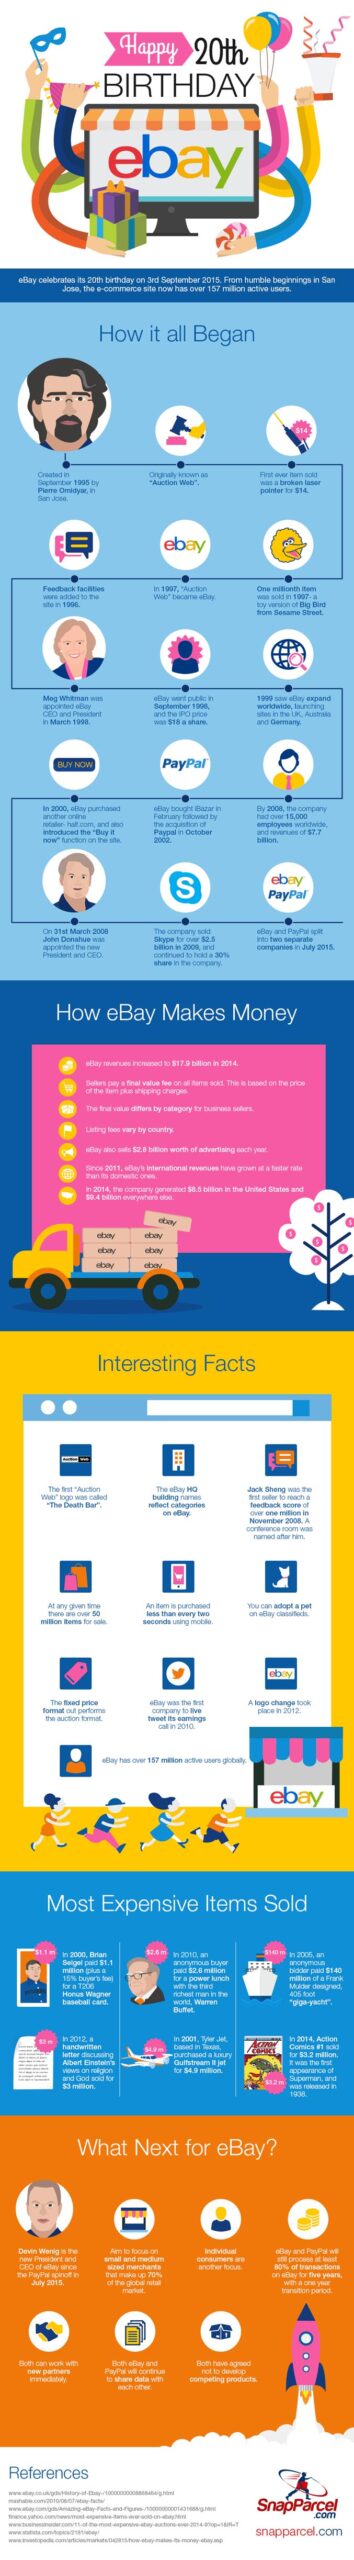 eBay 20th Birthday infographic